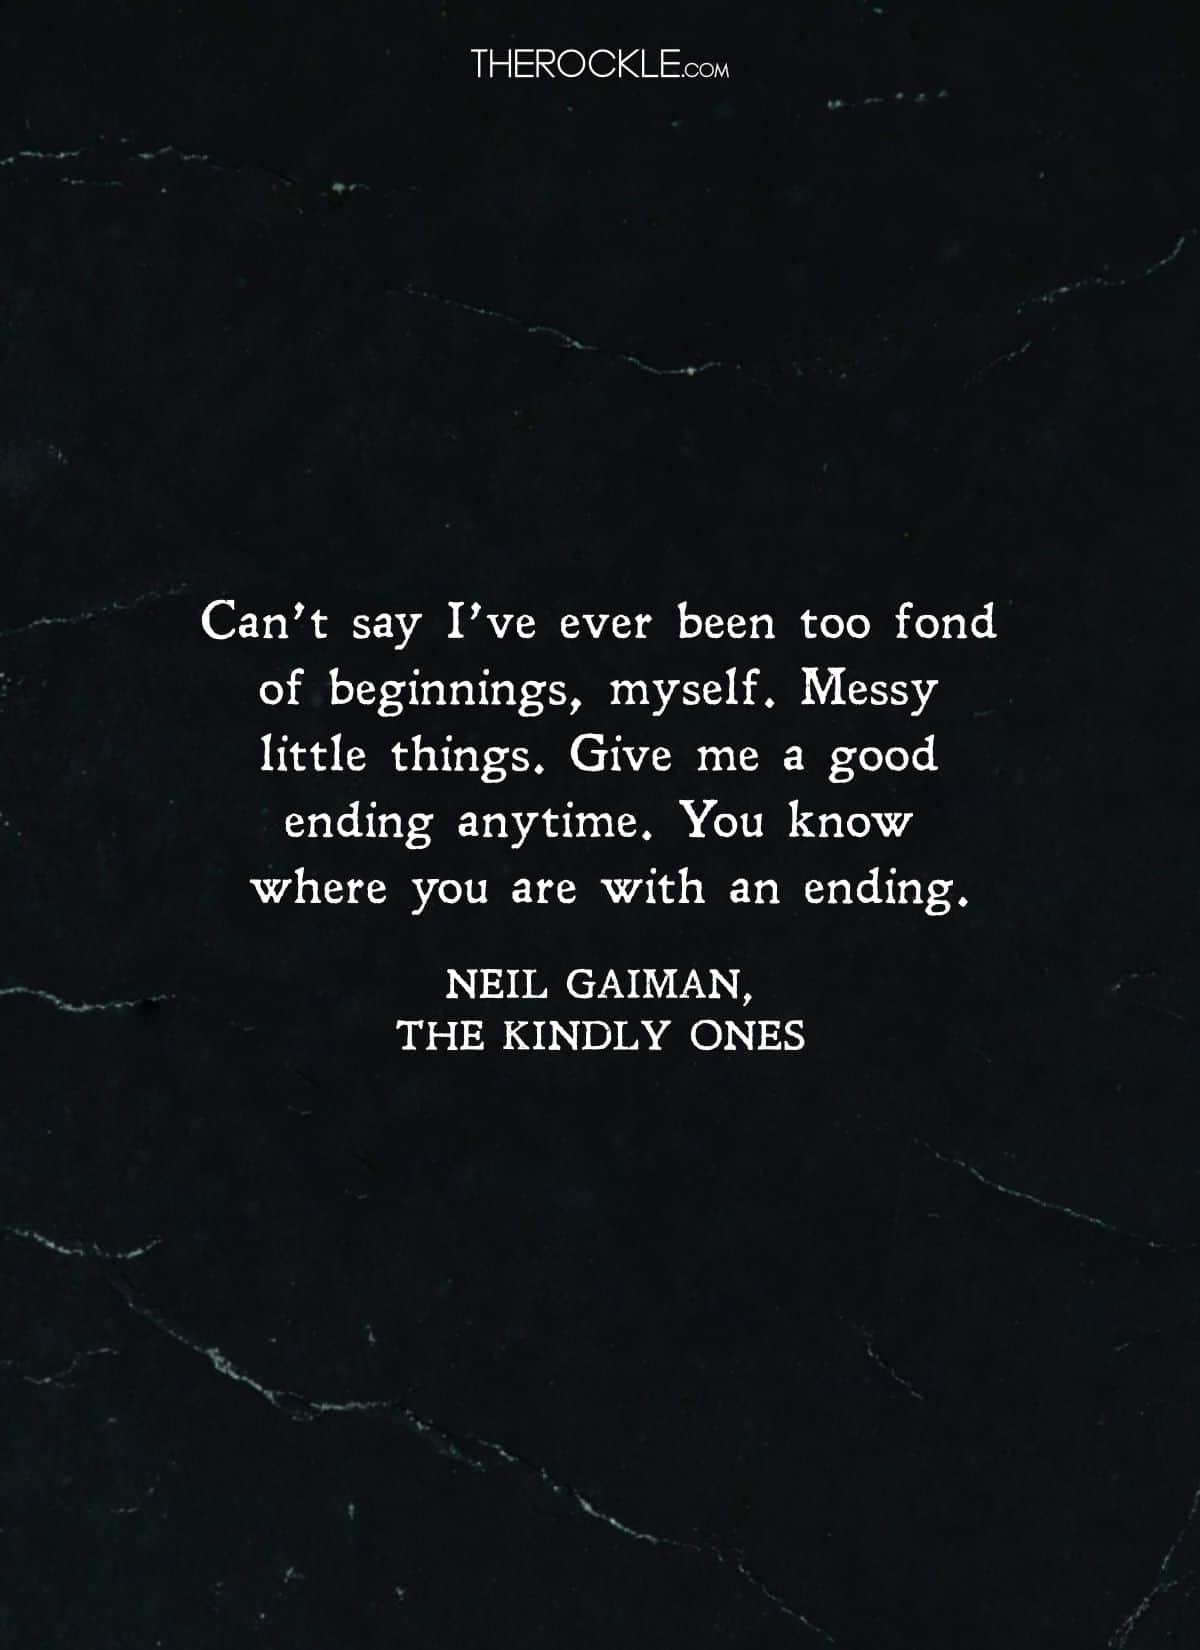 Neil Gaiman's quote on endings 